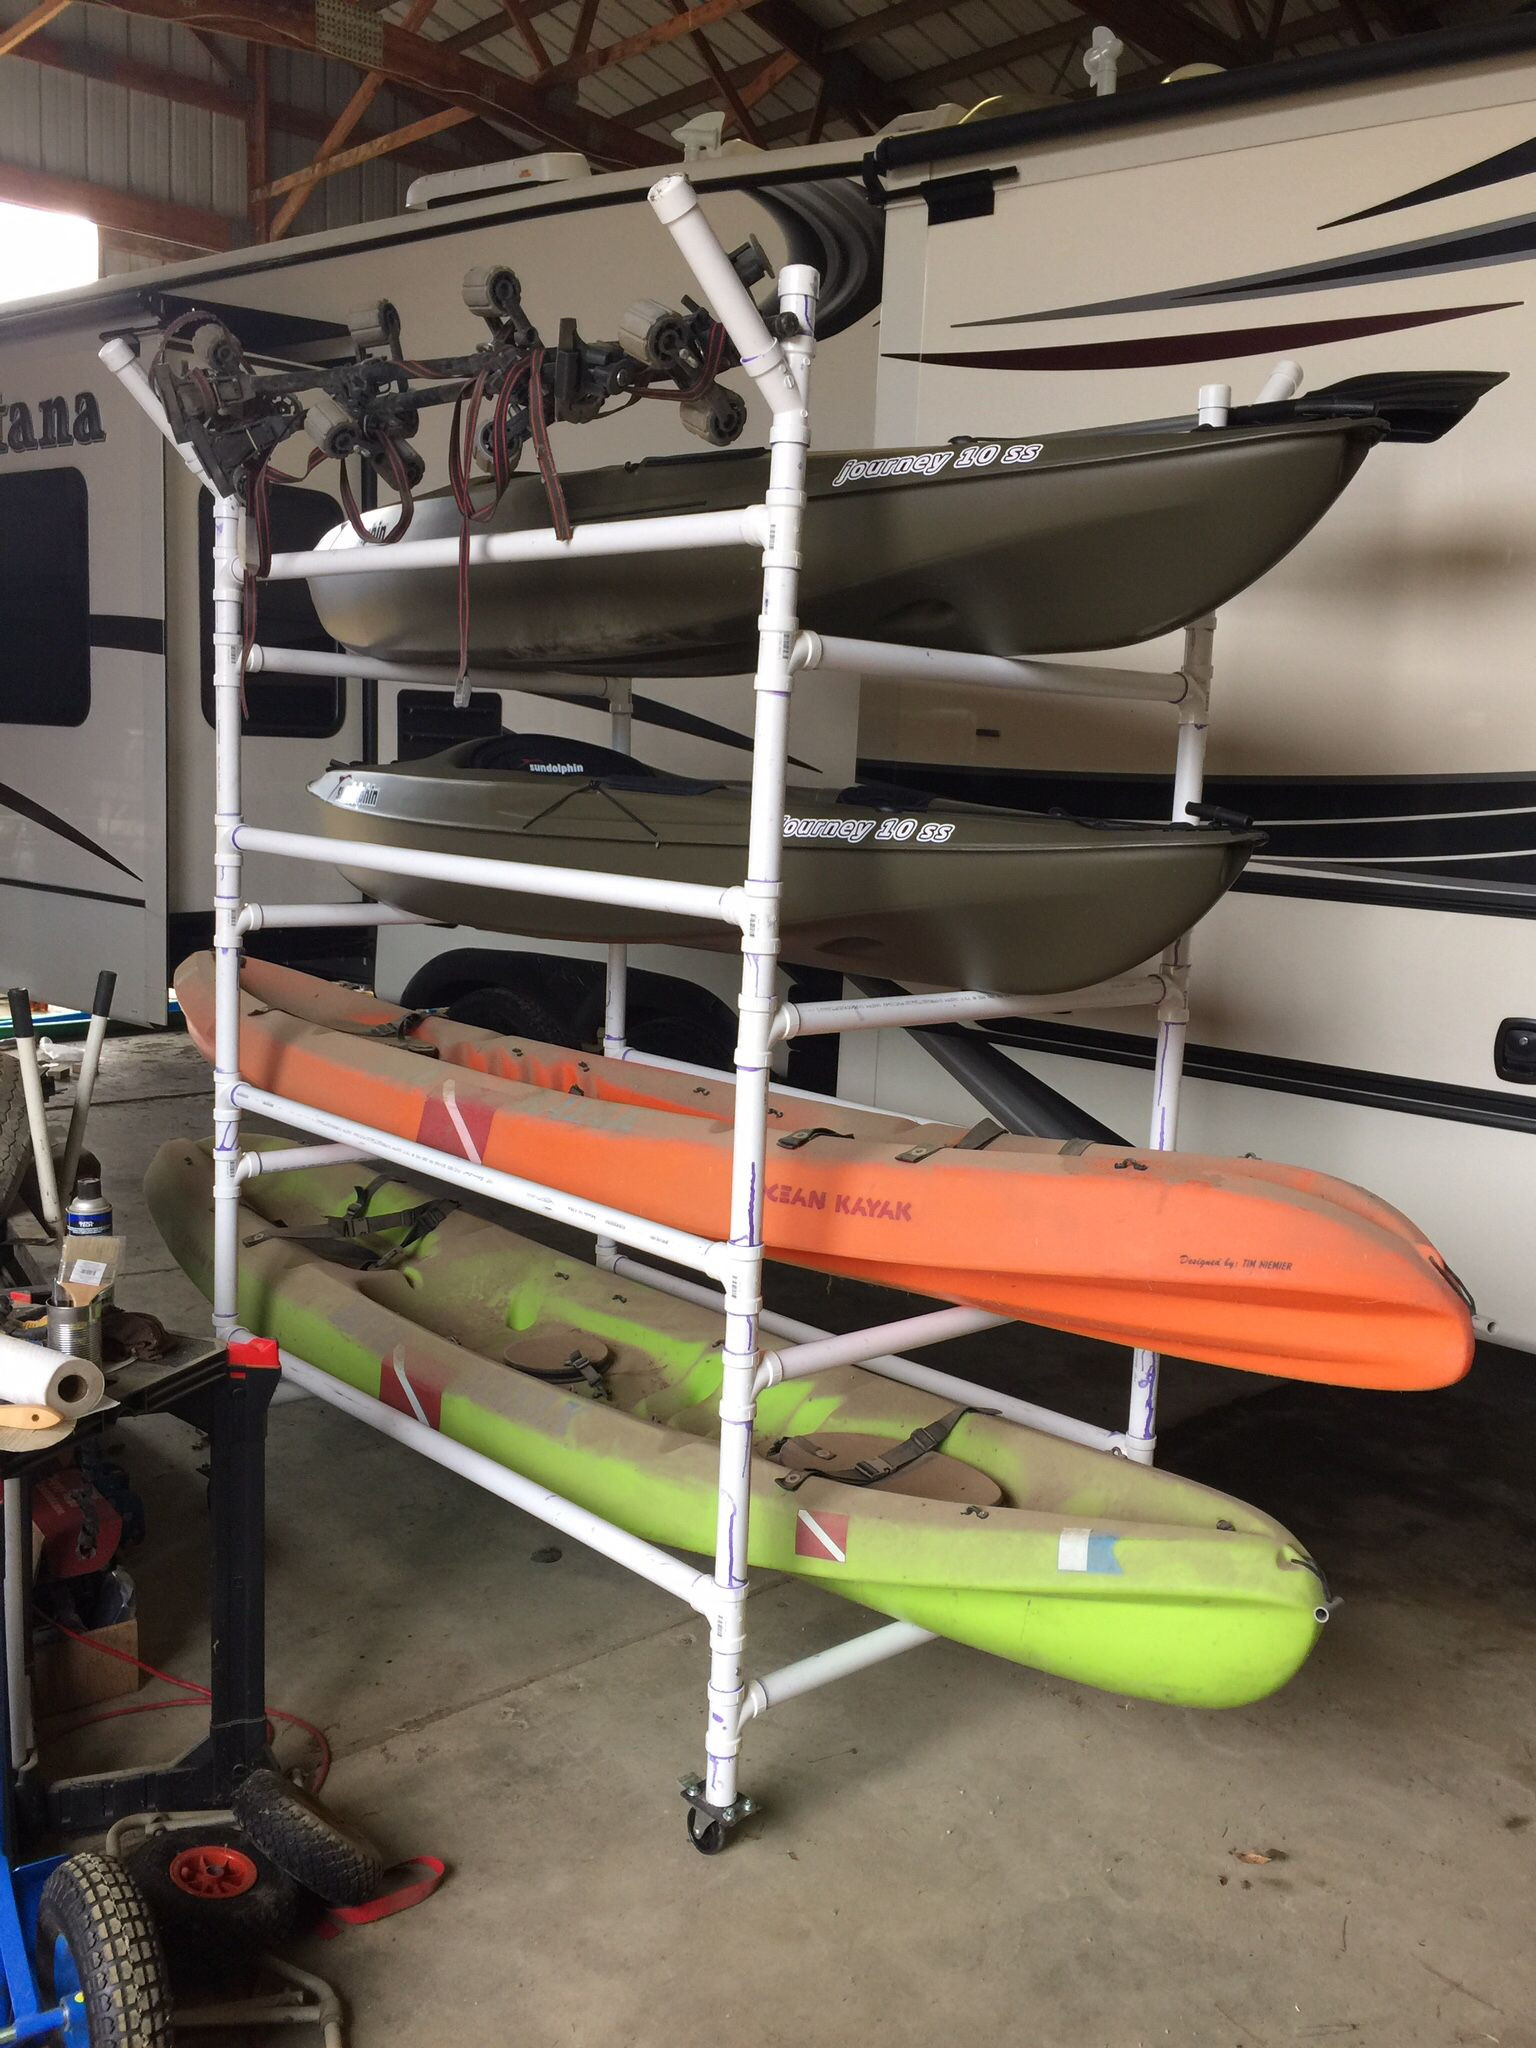 DIY Kayak Rack Pvc
 Homemade PVC kayak rack can store 4 kayaks paddles